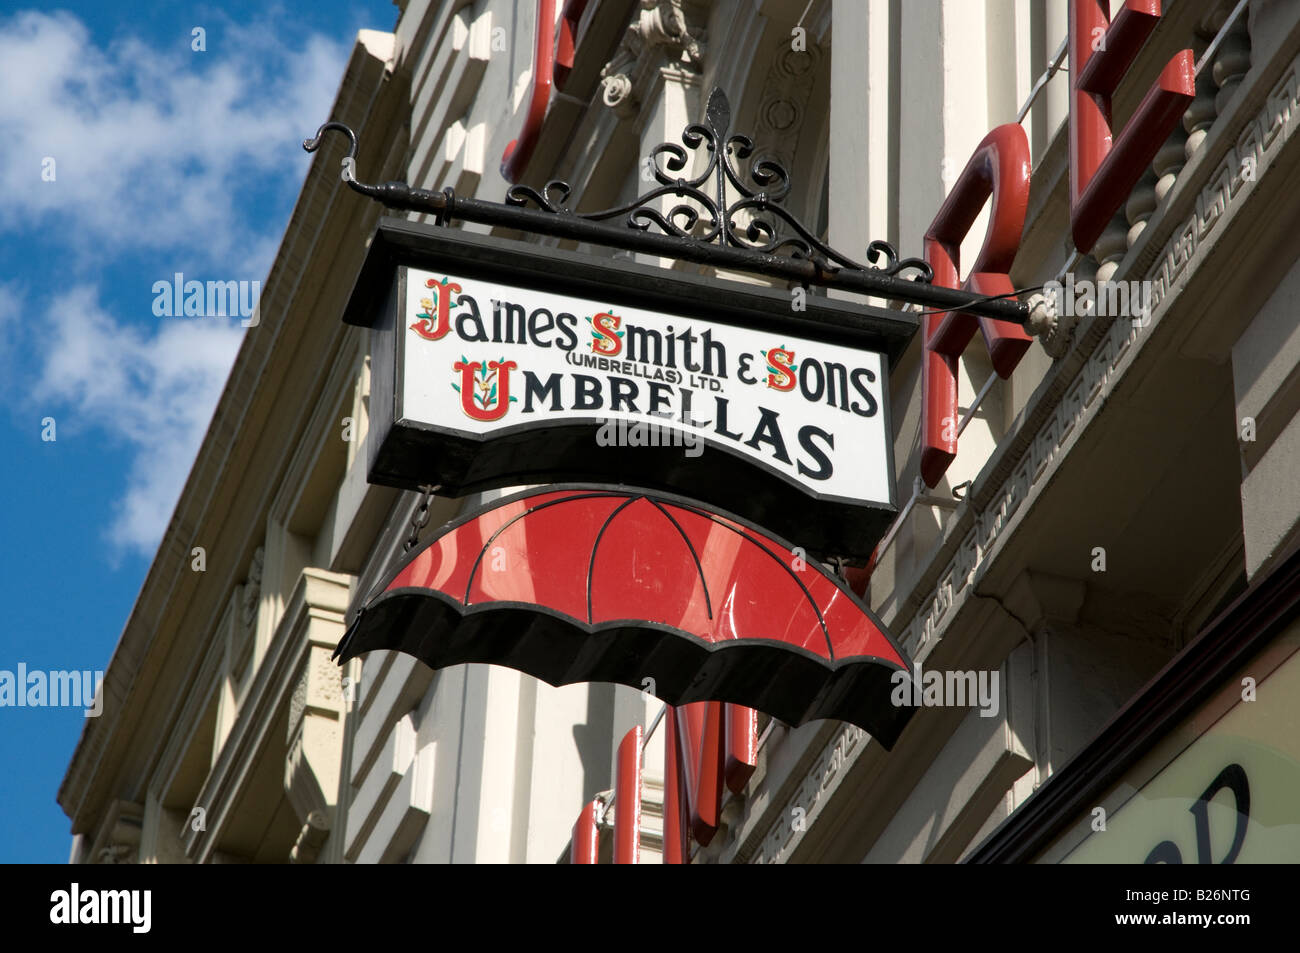 James Smith and Sons Umbrellas, London England UK Stock Photo